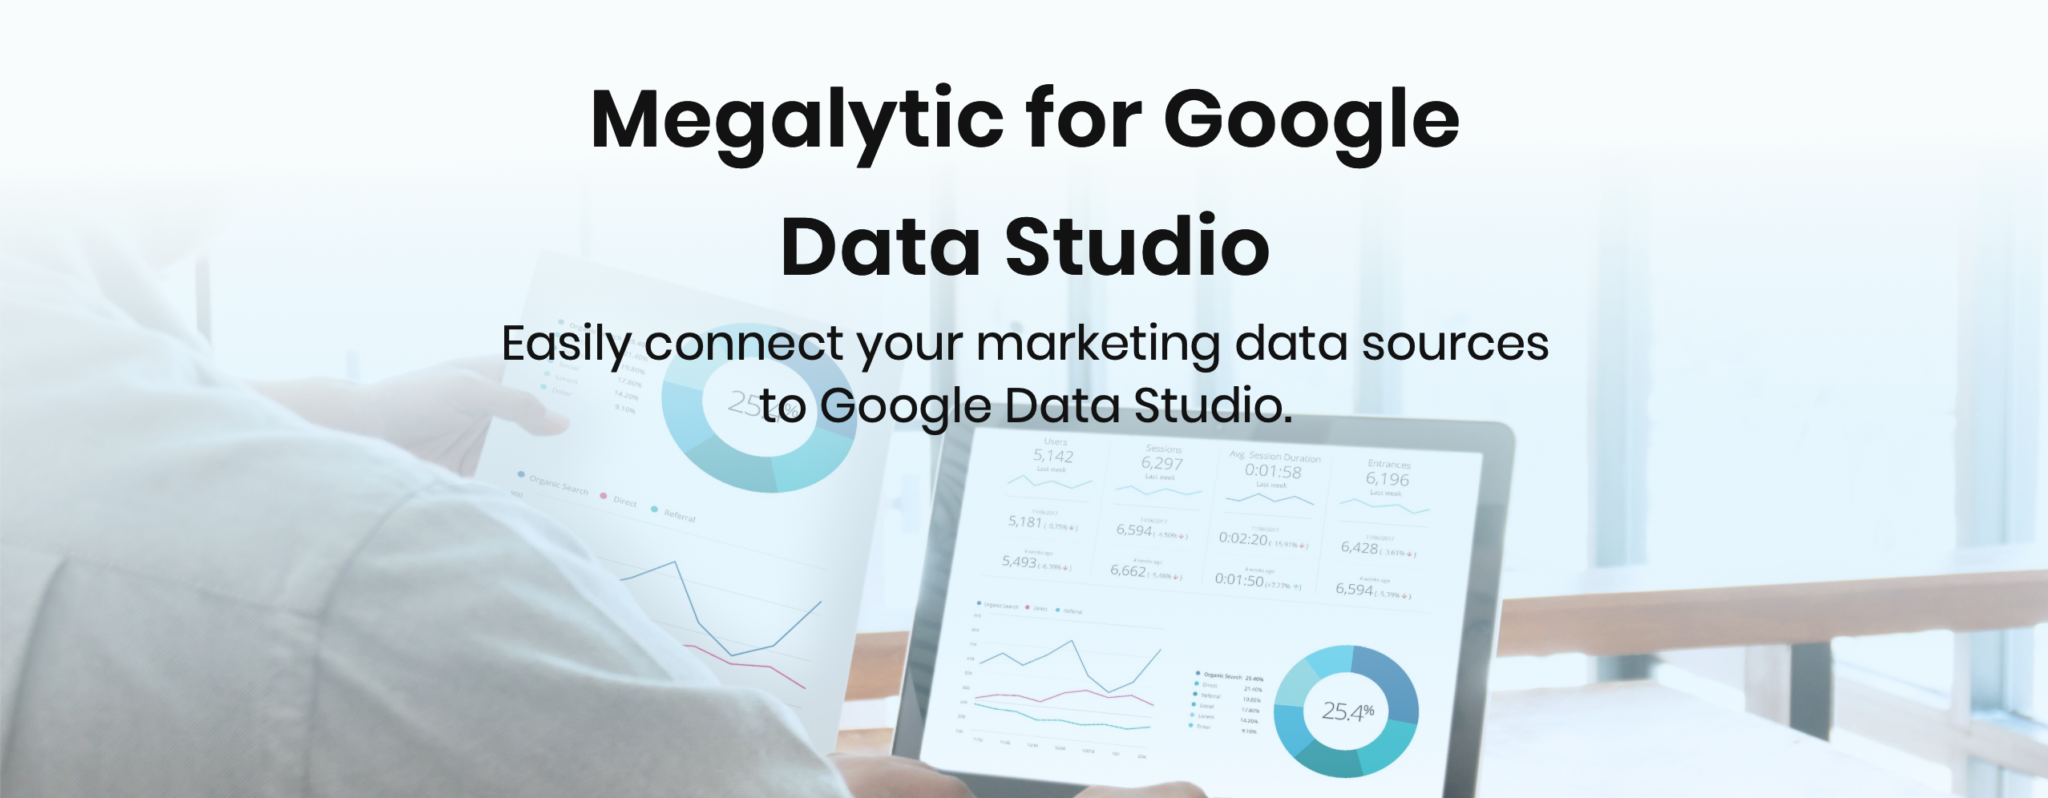 Top 5 Third-party Data Connectors for Google Data Studio Digital Marketing 